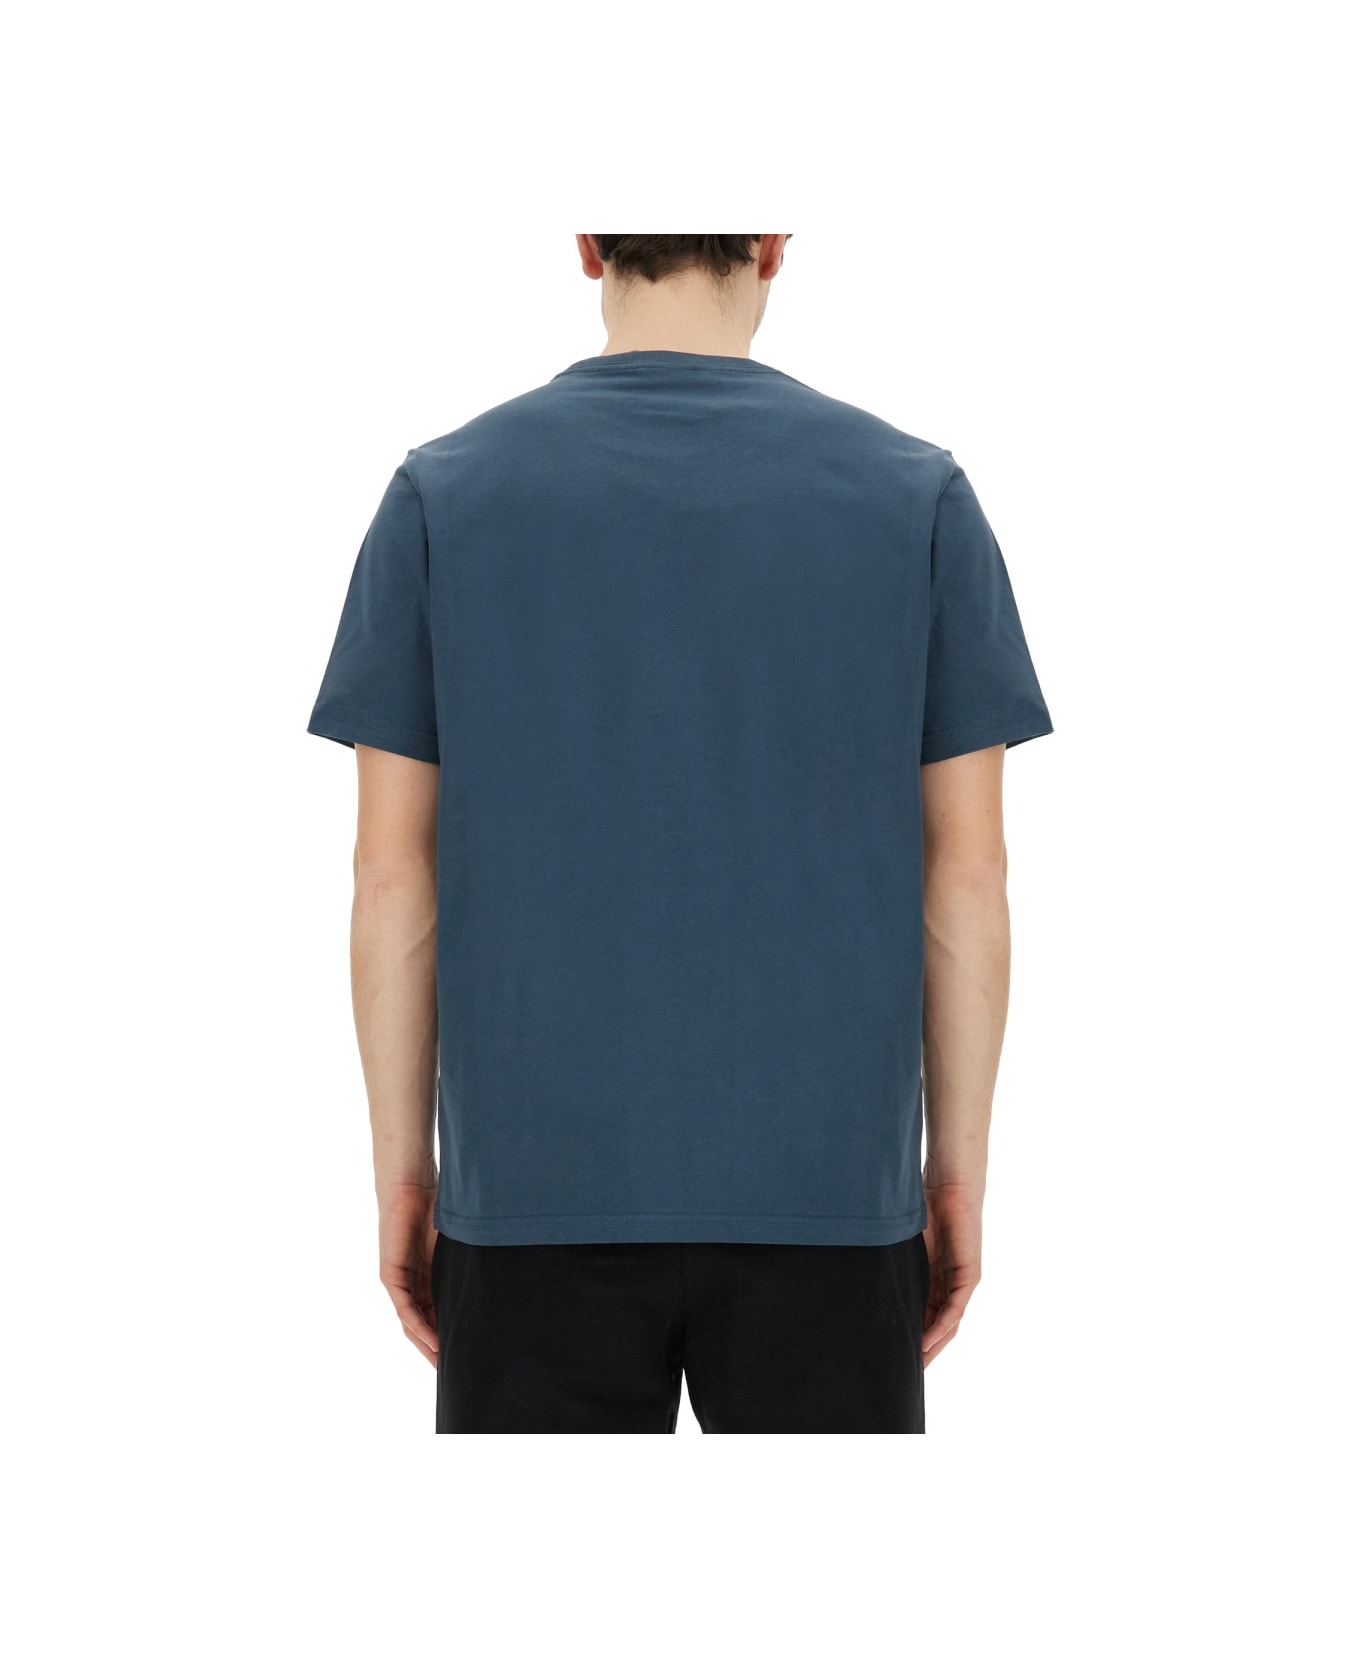 Paul Smith 'zebra' T-shirt - Blue シャツ